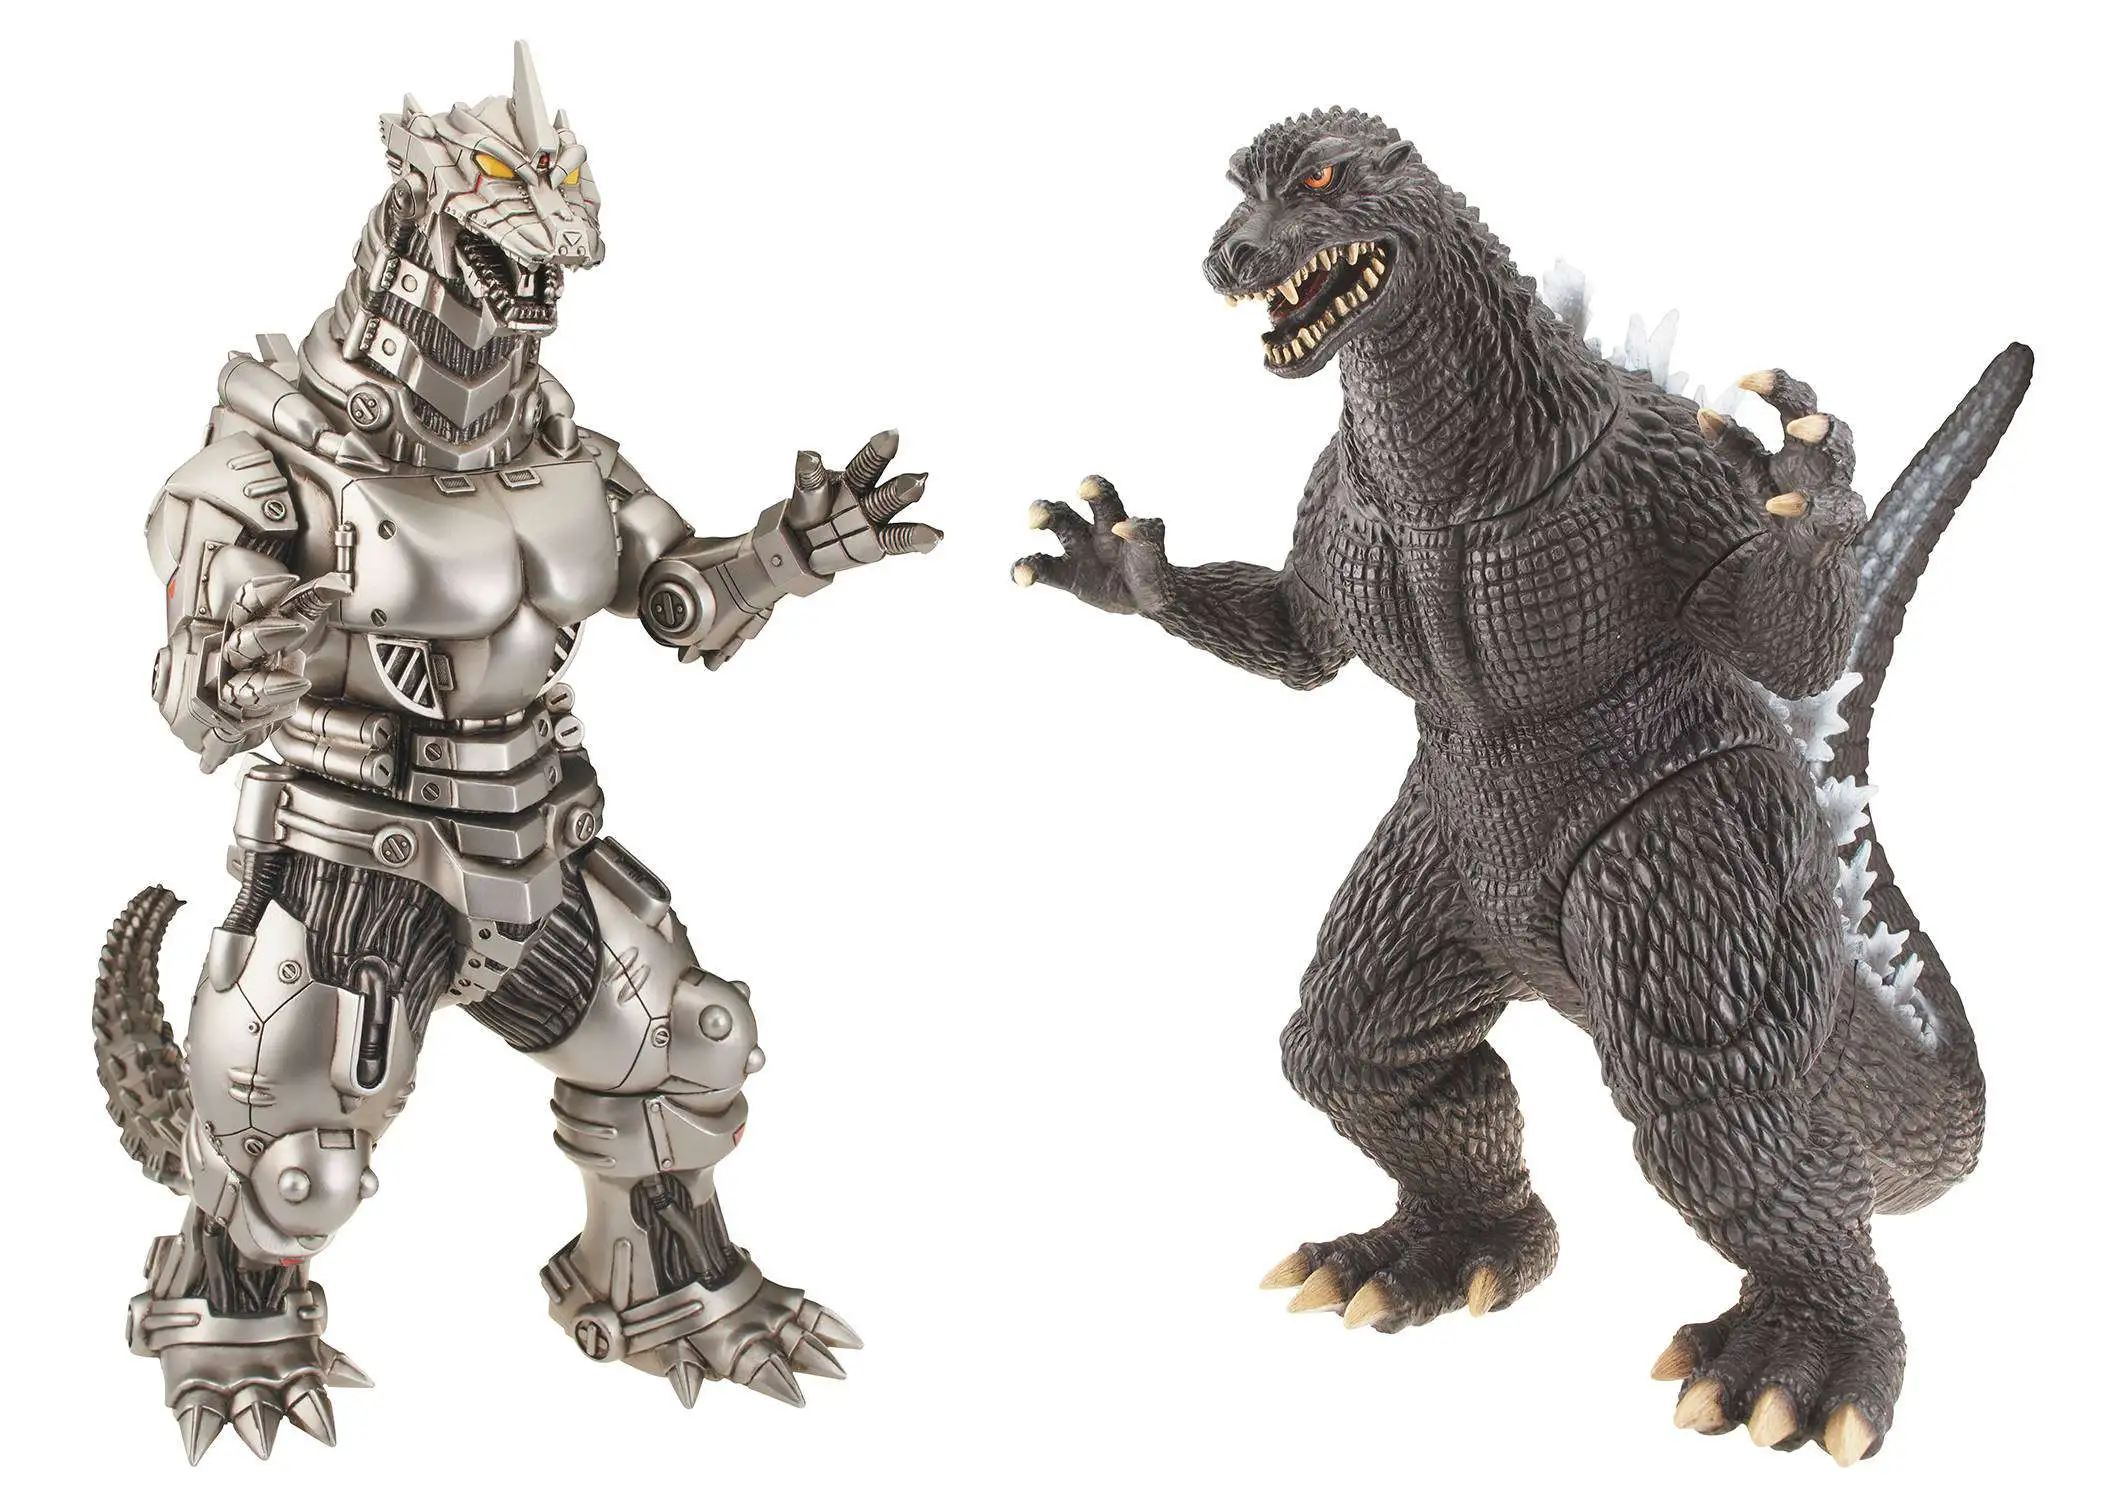 7 Inch Action Figure⚡️FAST SHIPPING⚡️ Playmates Godzilla Gigan 2004 